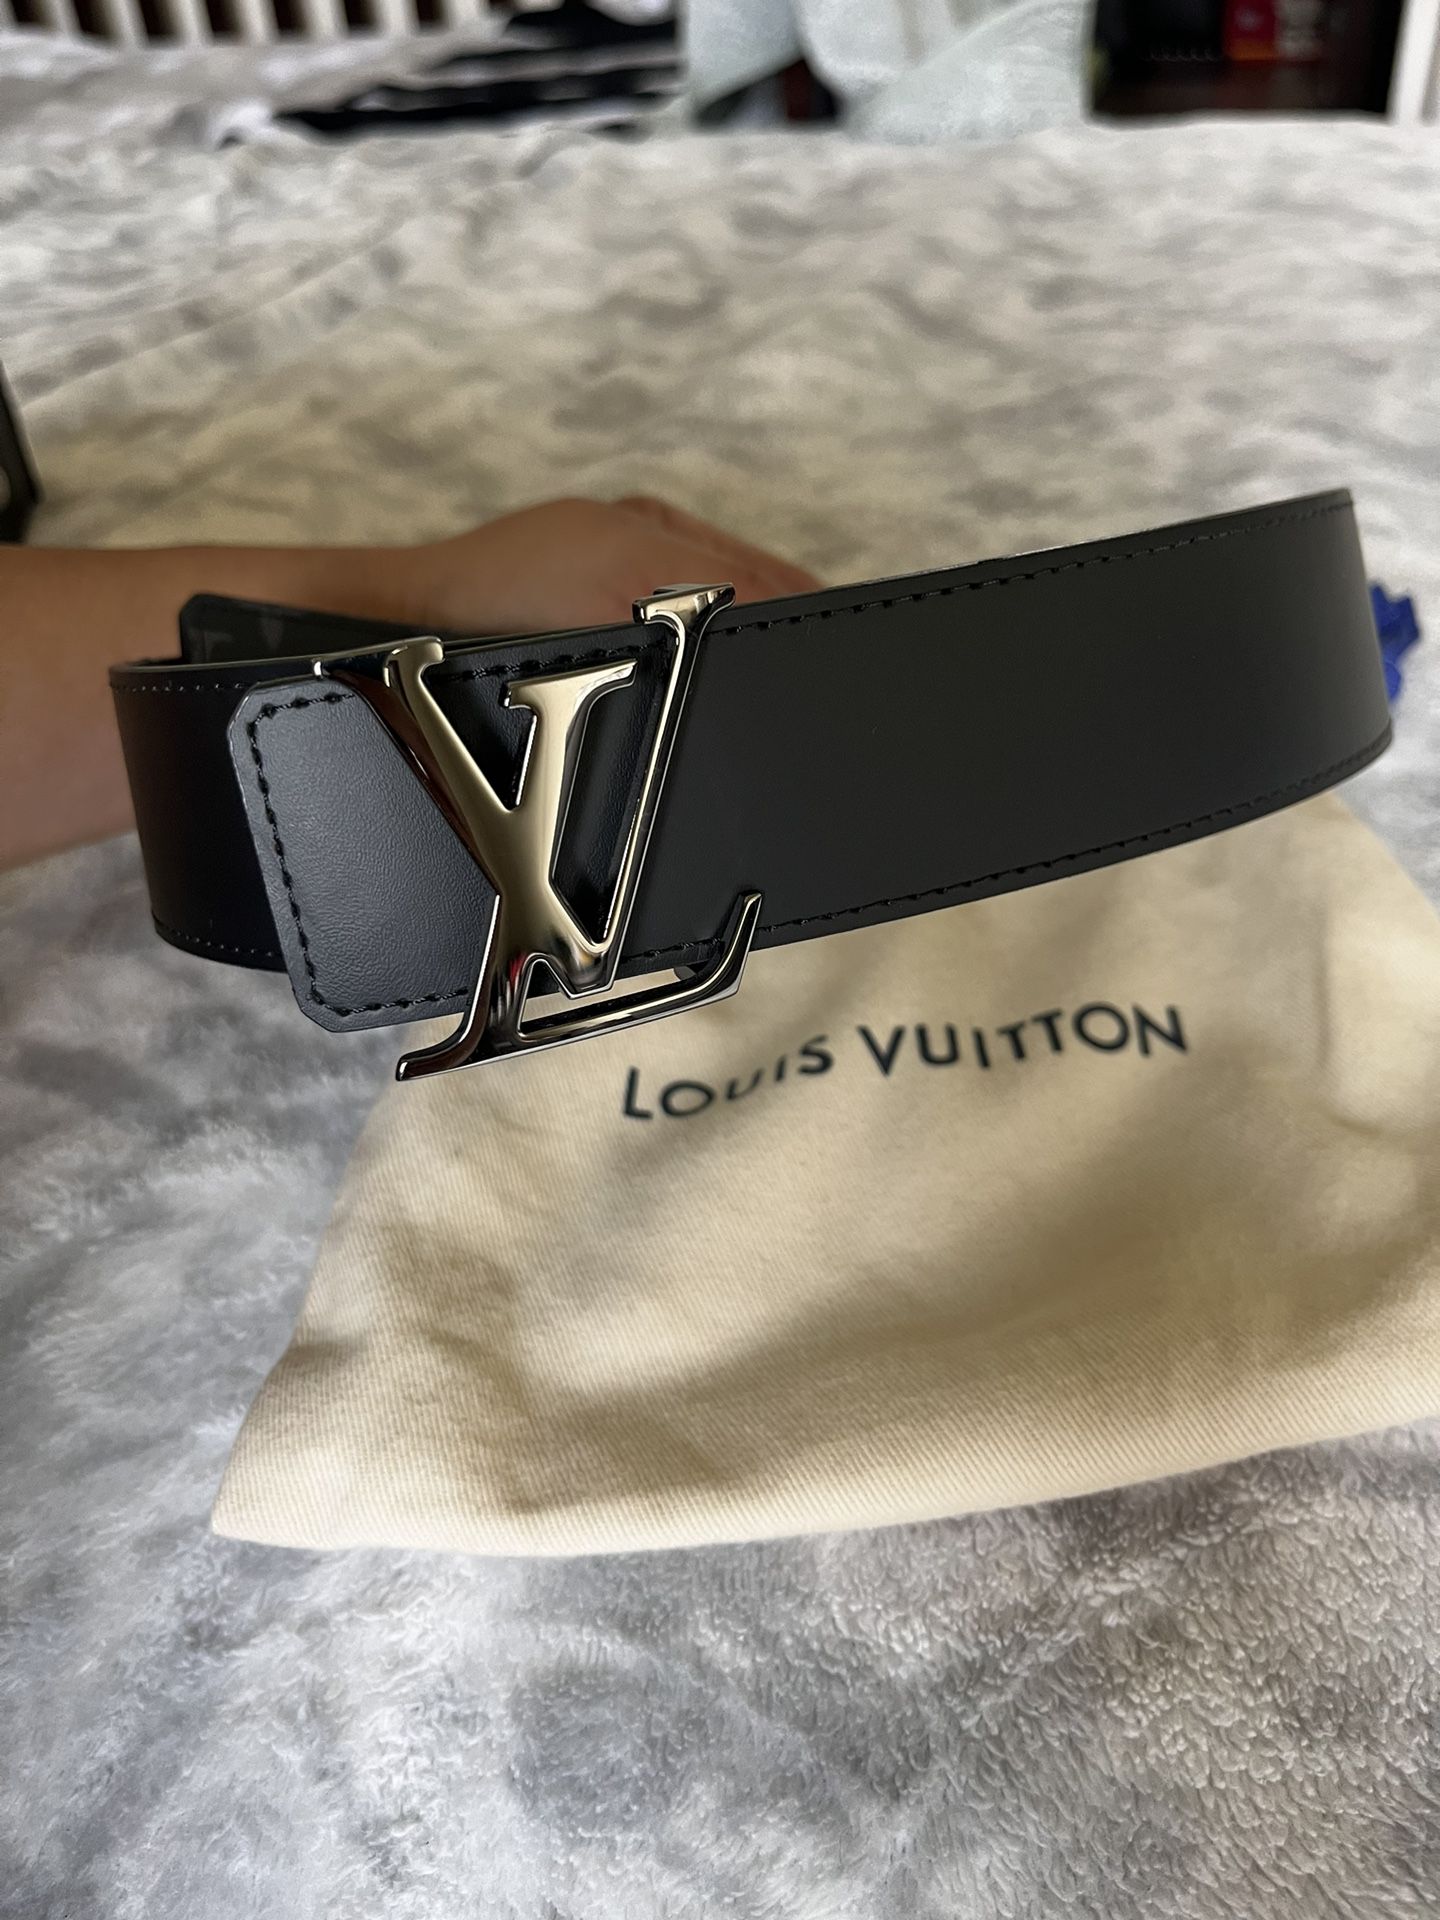 Louis Vuitton Sperone BB for Sale in Bell Gardens, CA - OfferUp